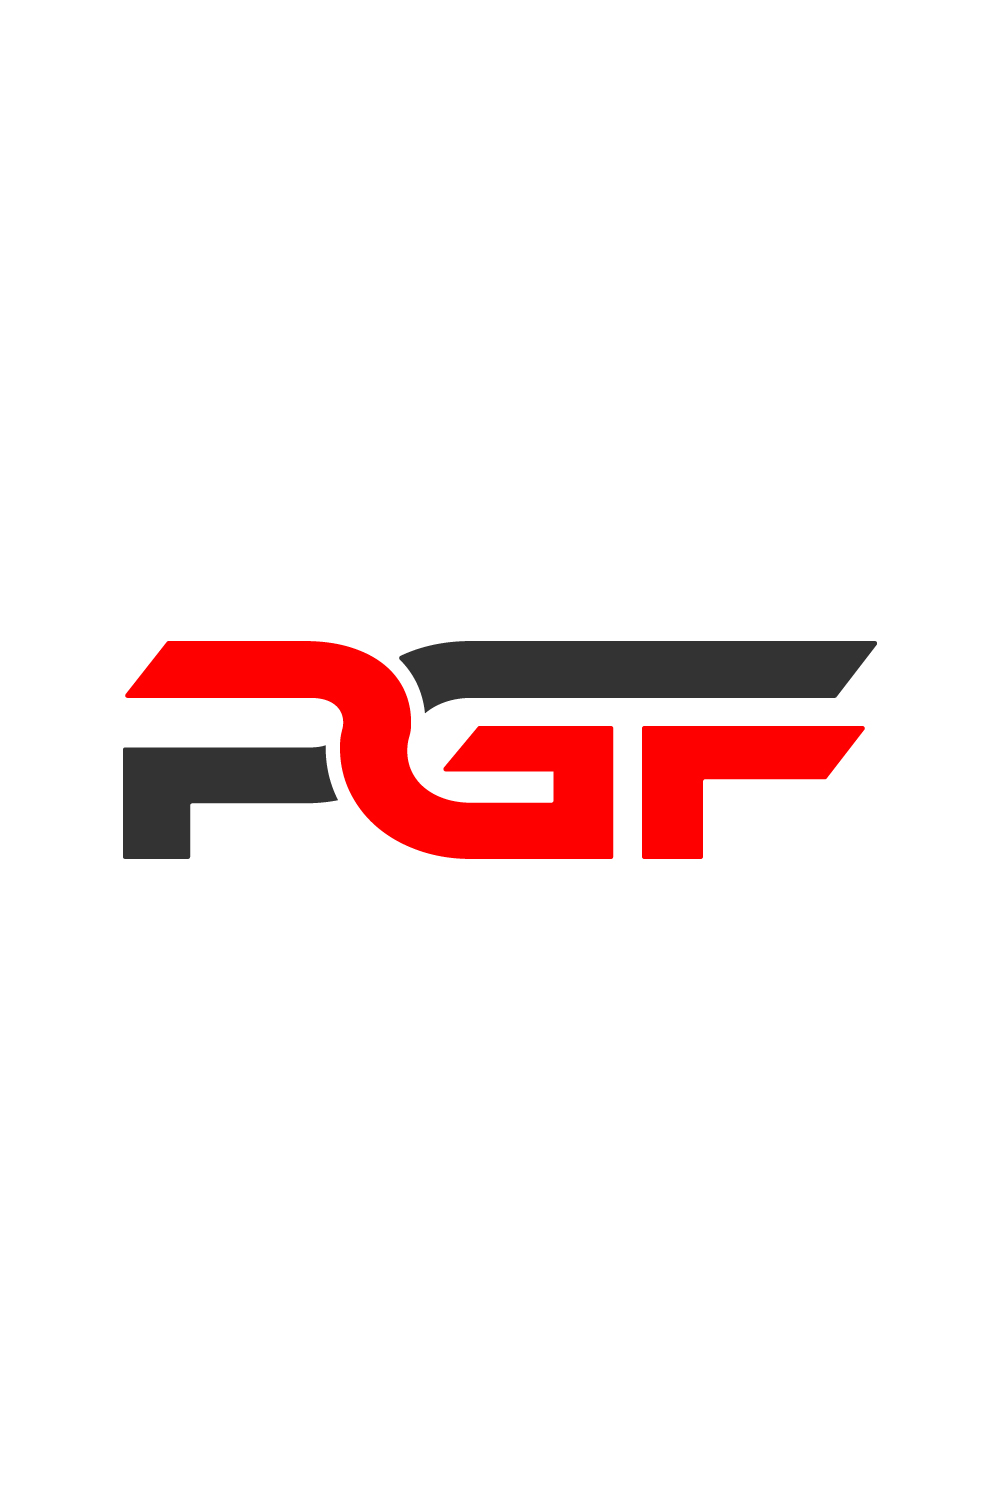 PGF letters logo design victor images FGP logo monogram best identity Professional letters logo design best identity pinterest preview image.